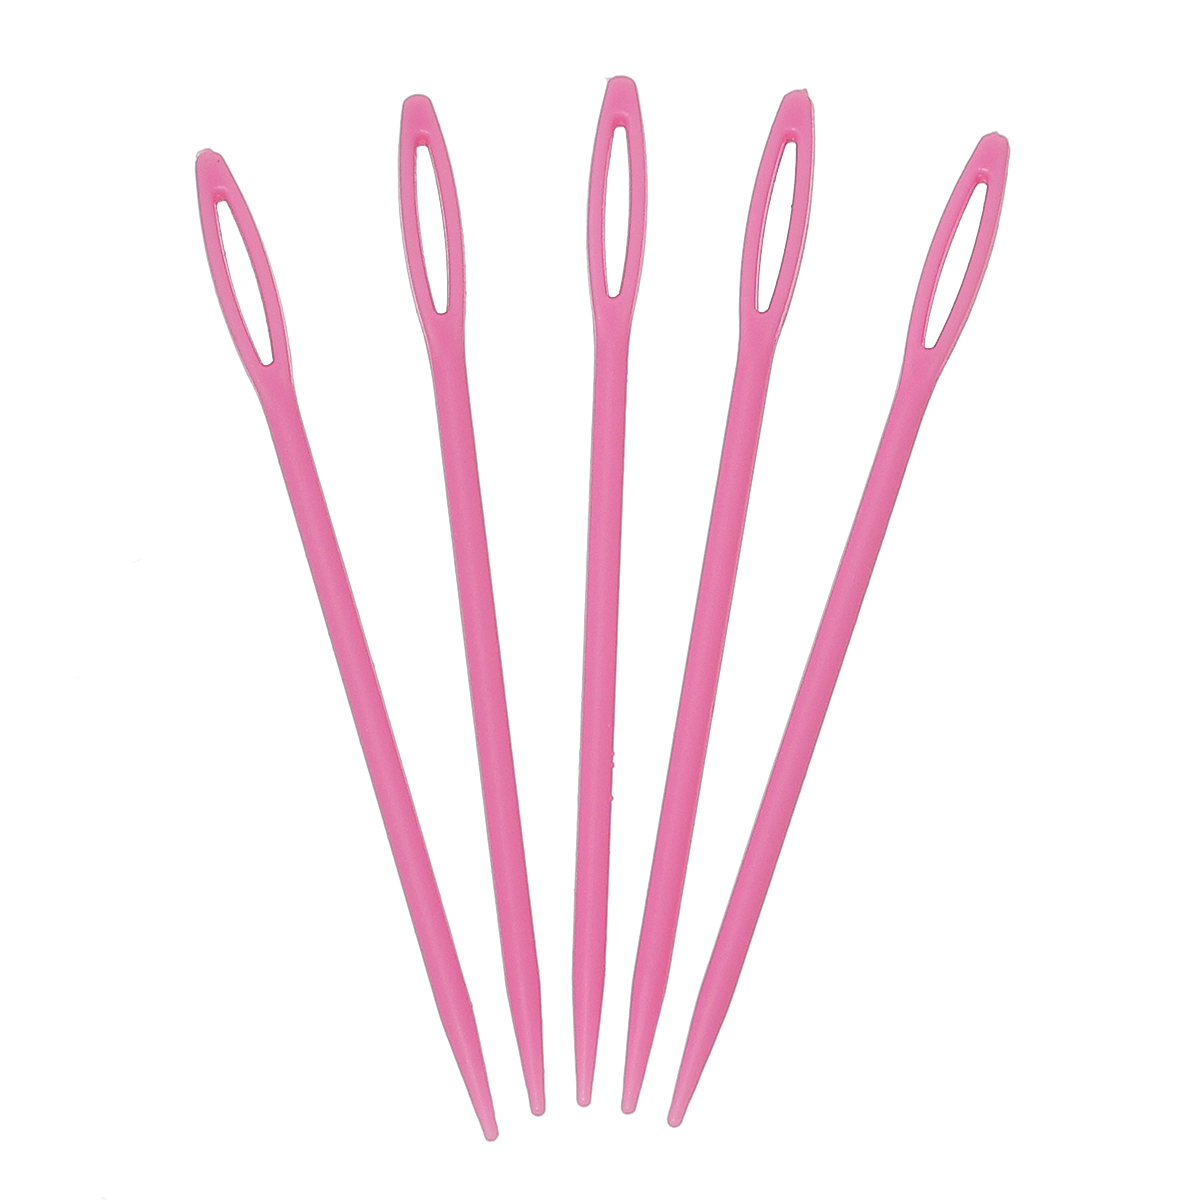 Image of Acrylic Knitting Needles Fuchsia 1.6mm( 1/8")48.0mm(1 7/8"),20 PCs 2015 new